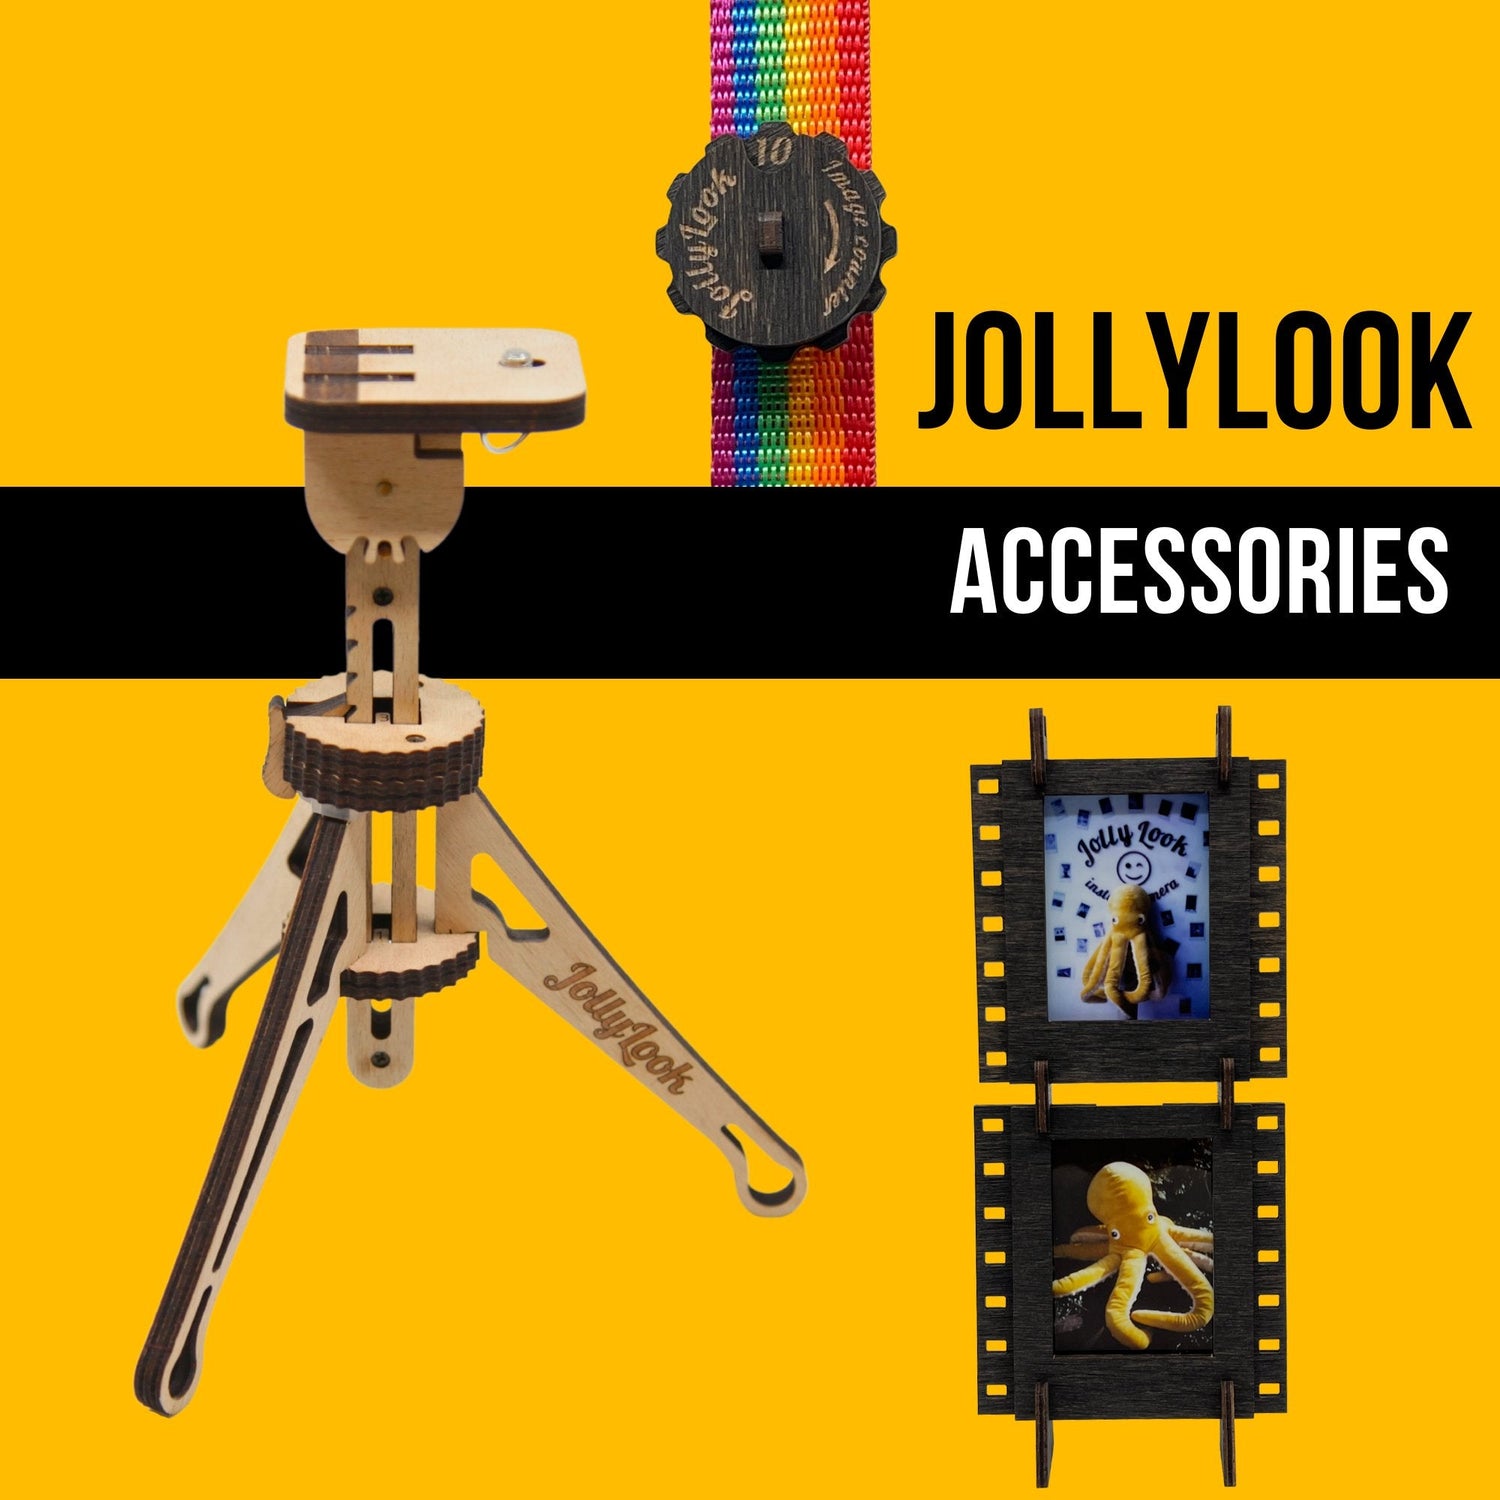 Jollylook Accessories for Instant Cameras, DIY Tripods, Decoration Frames, Magnet Tapes, Neck Strap, Camera Bag